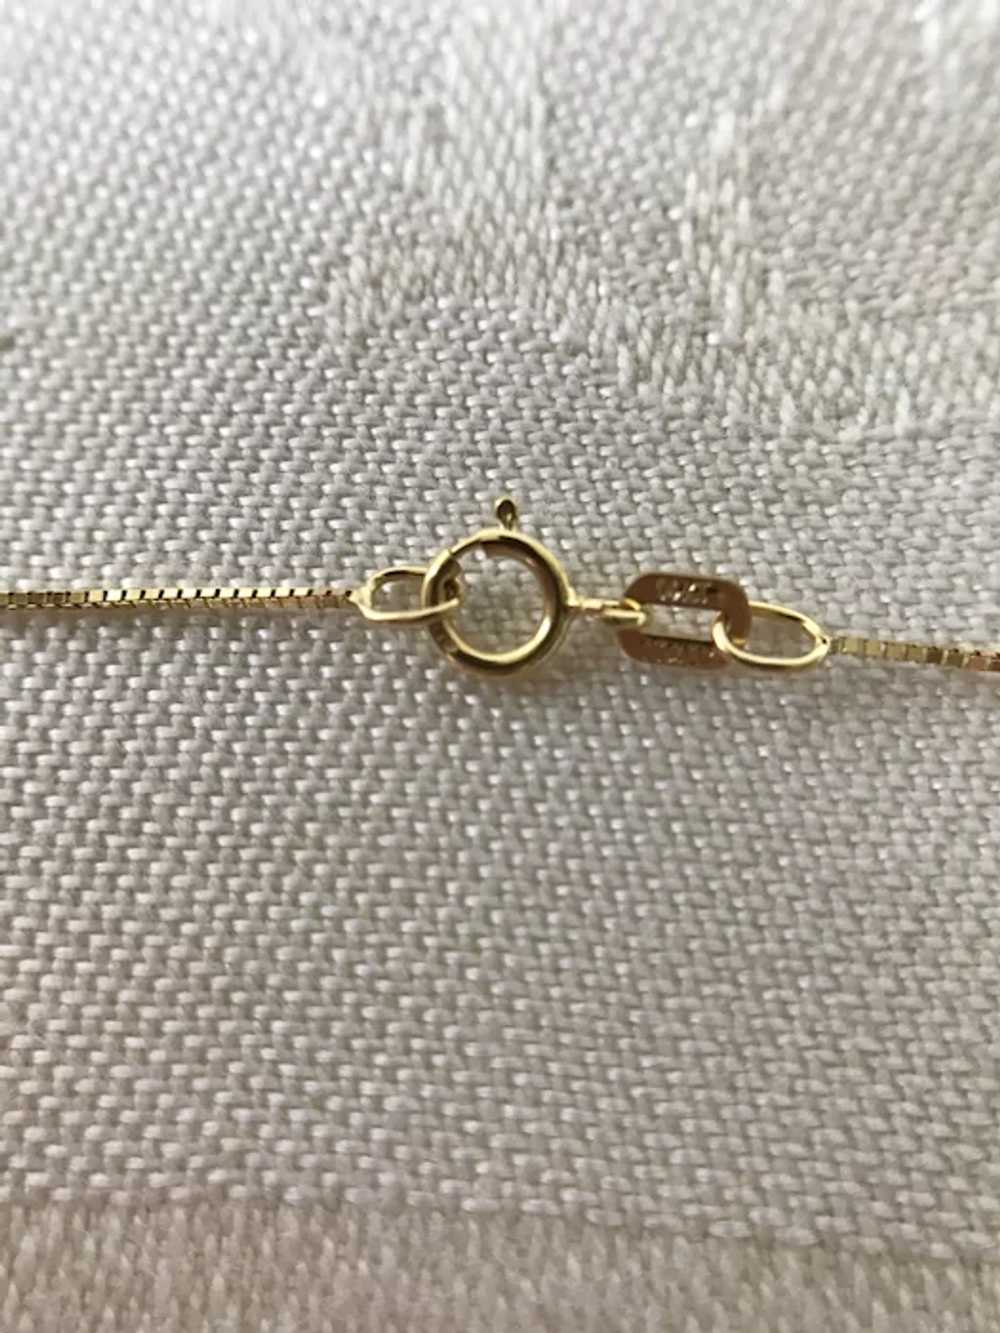 Etched 14K Gold Heart Pendant Necklace - image 4